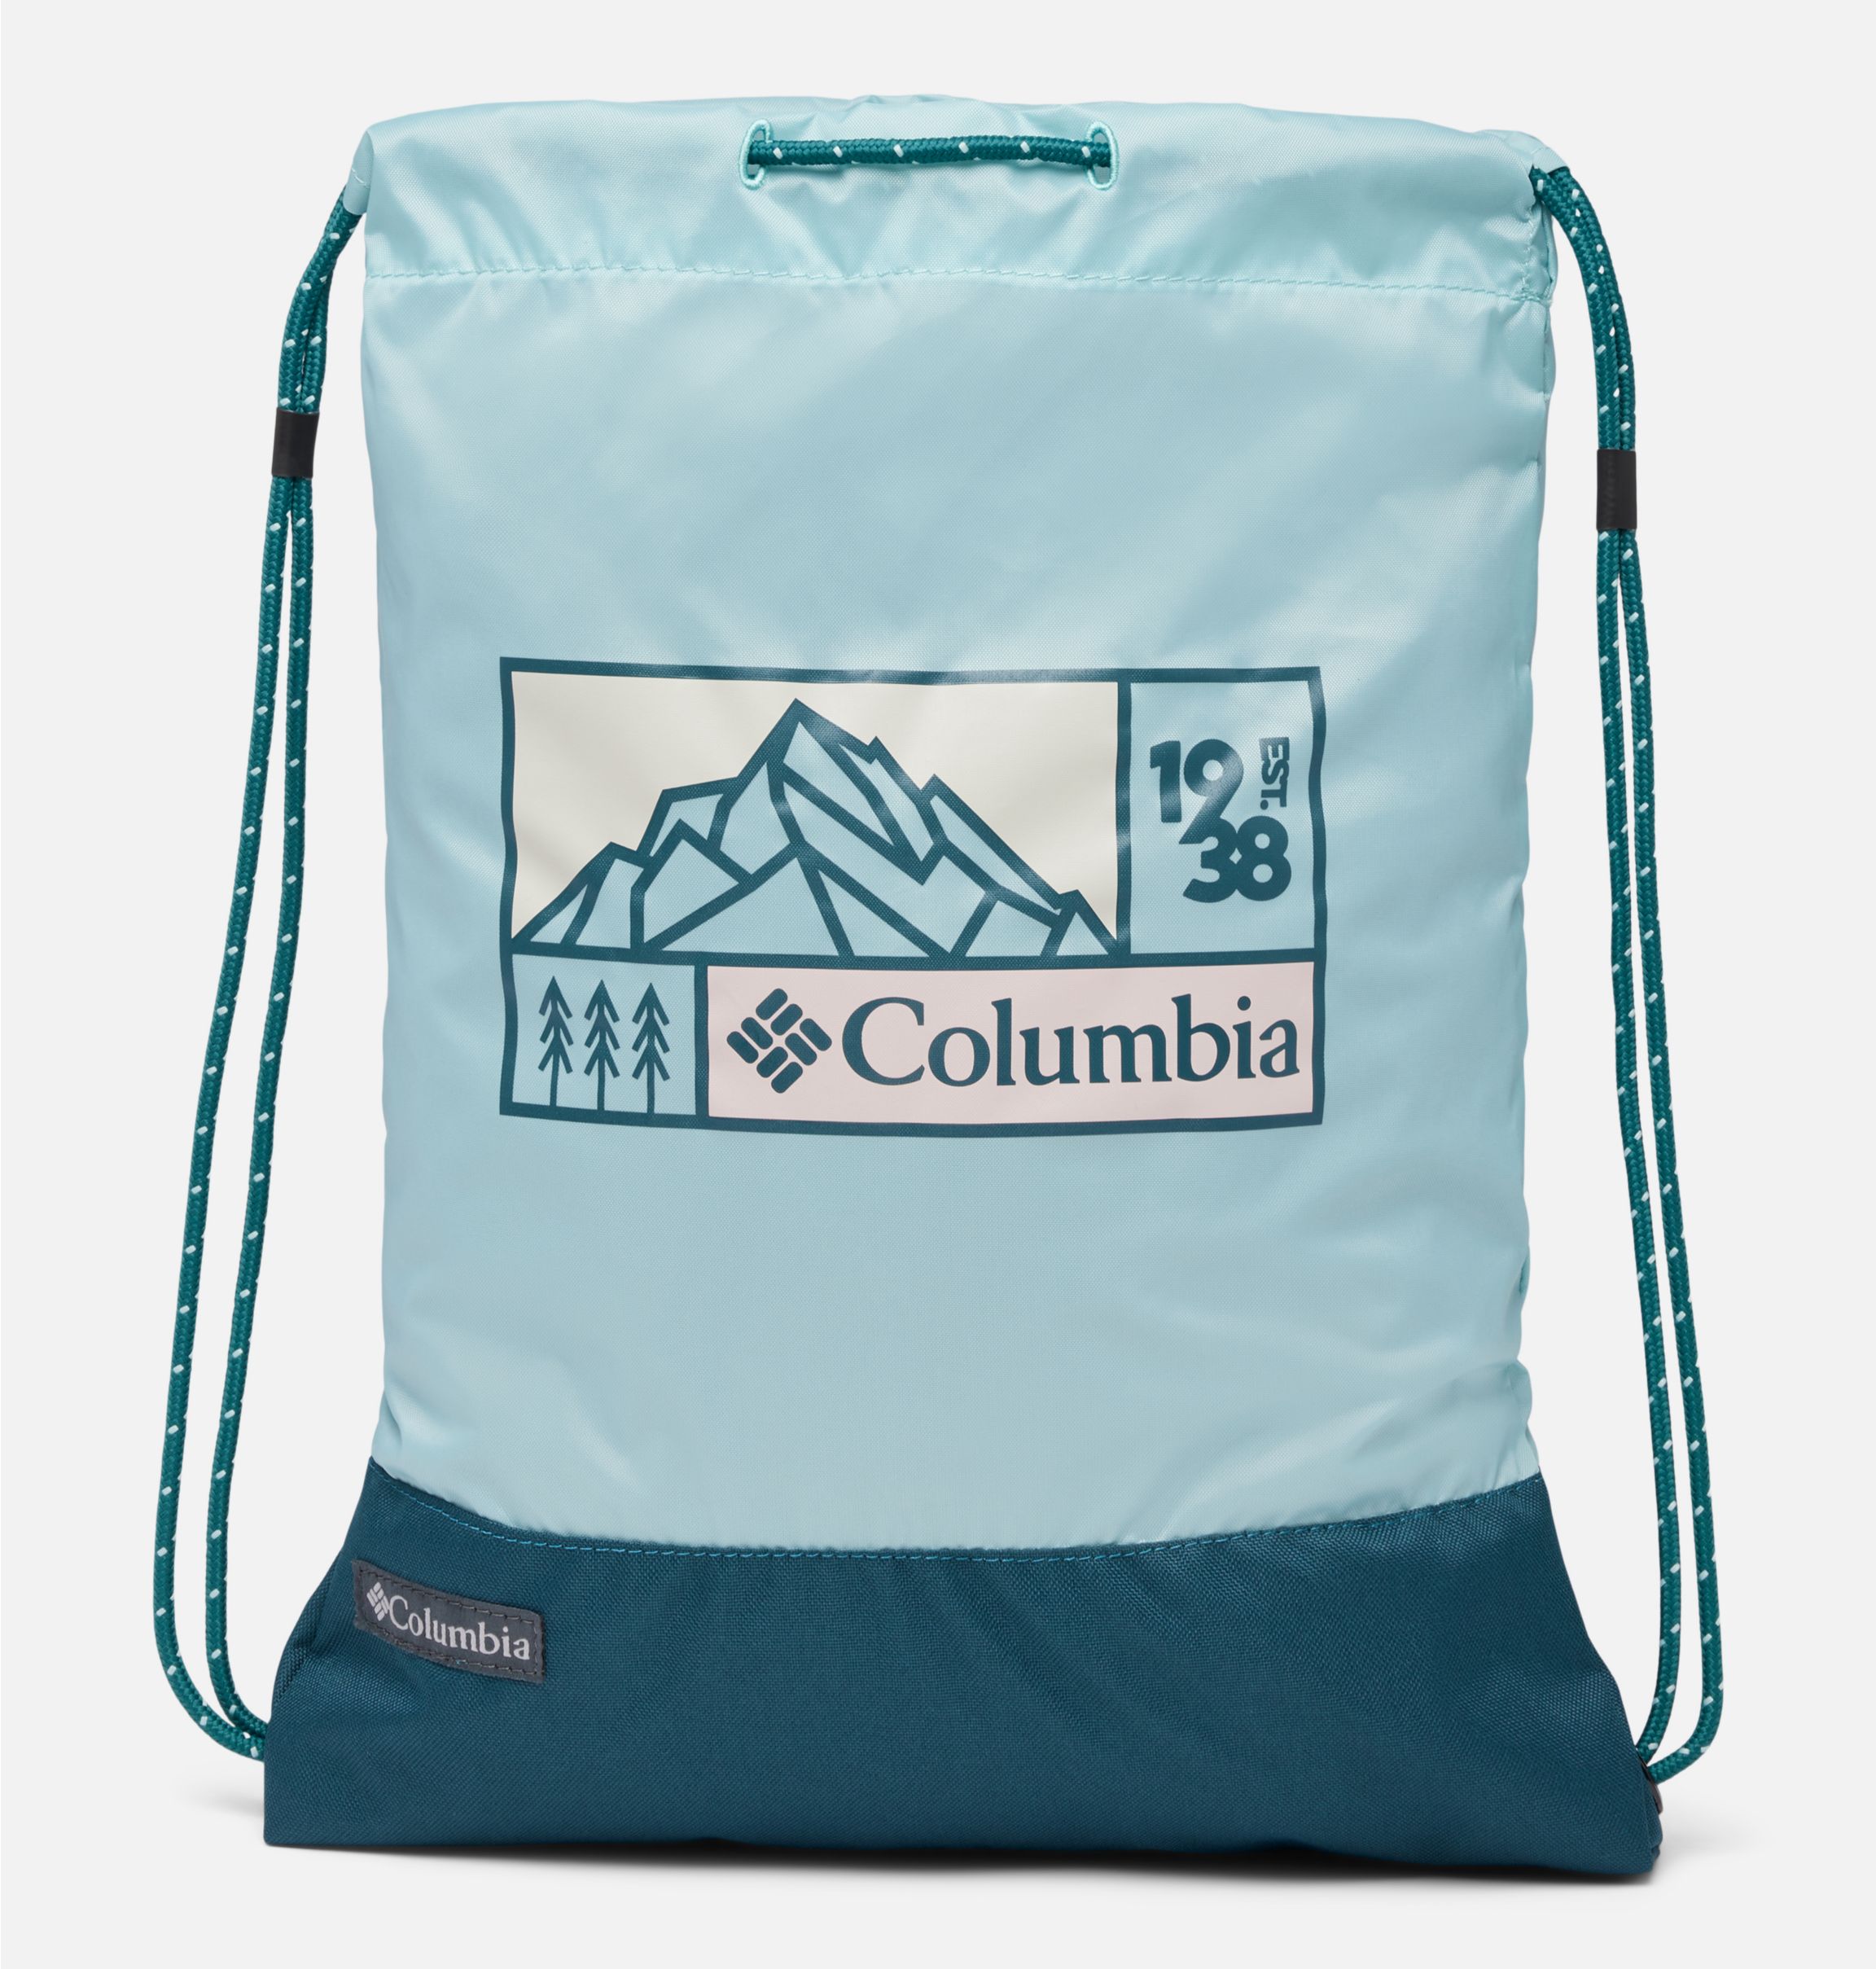 Drawstring Backpack Bag, Waterproof Draw String Back Sack With Zip